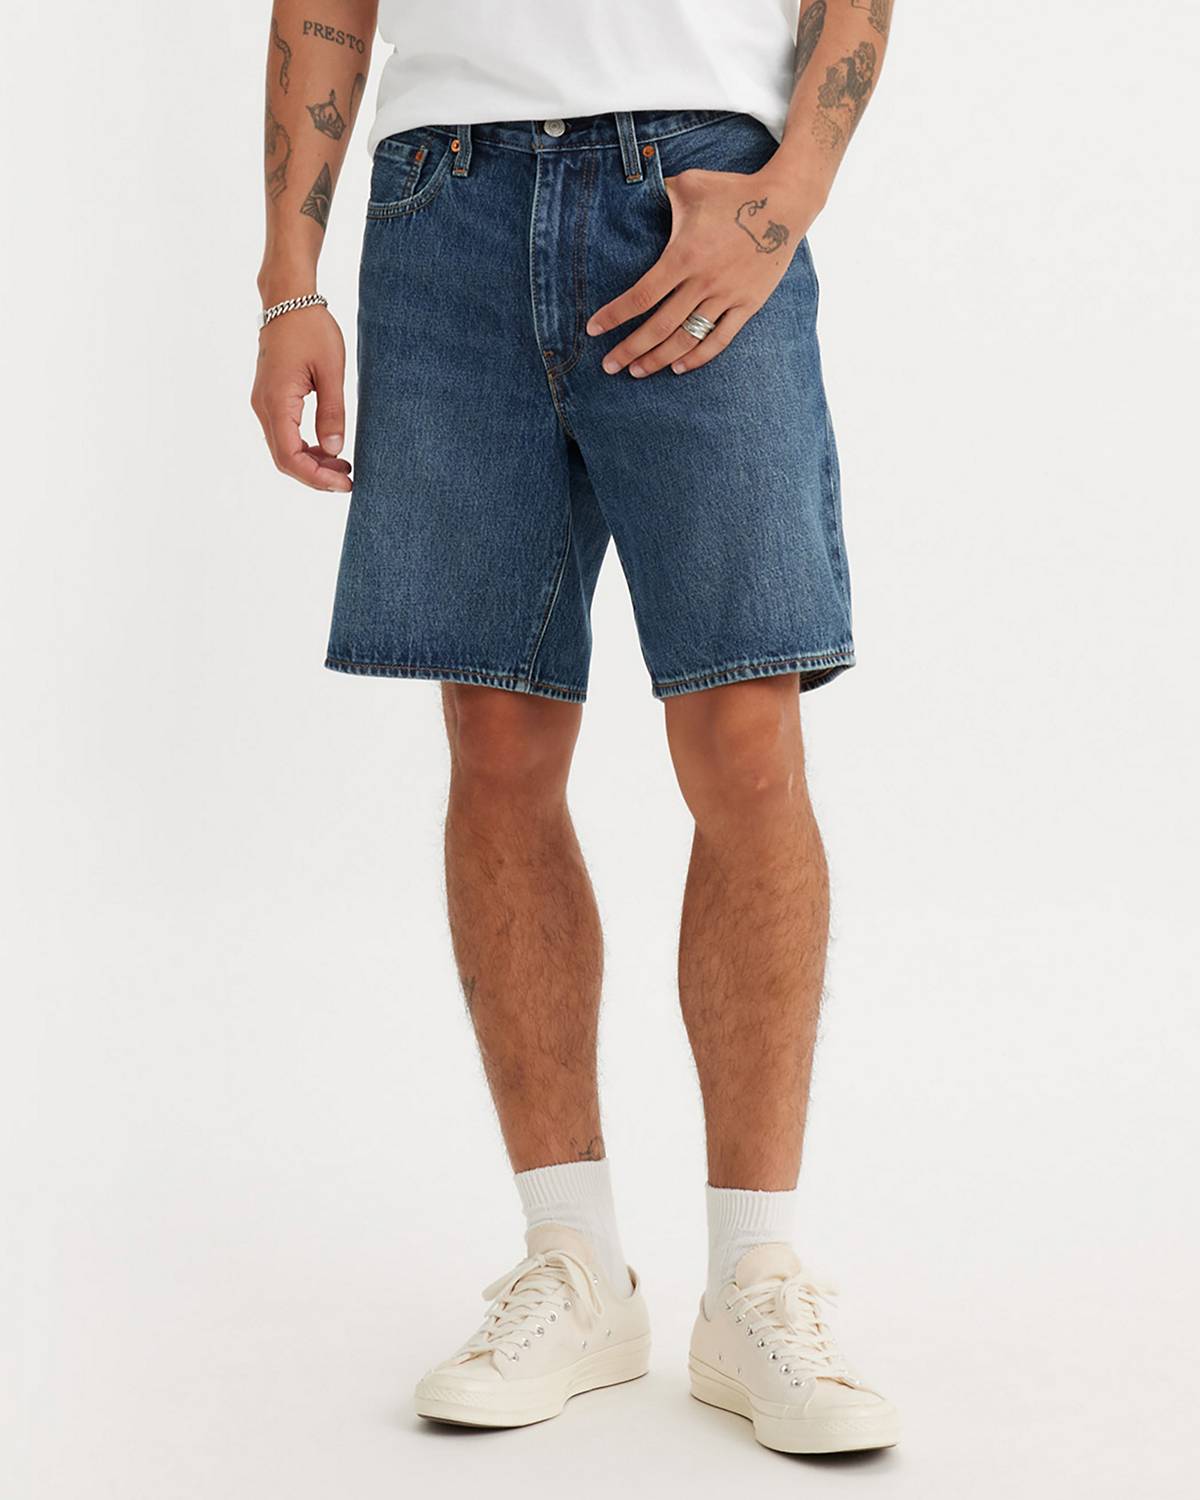 Model wearing denim loose fit shorts